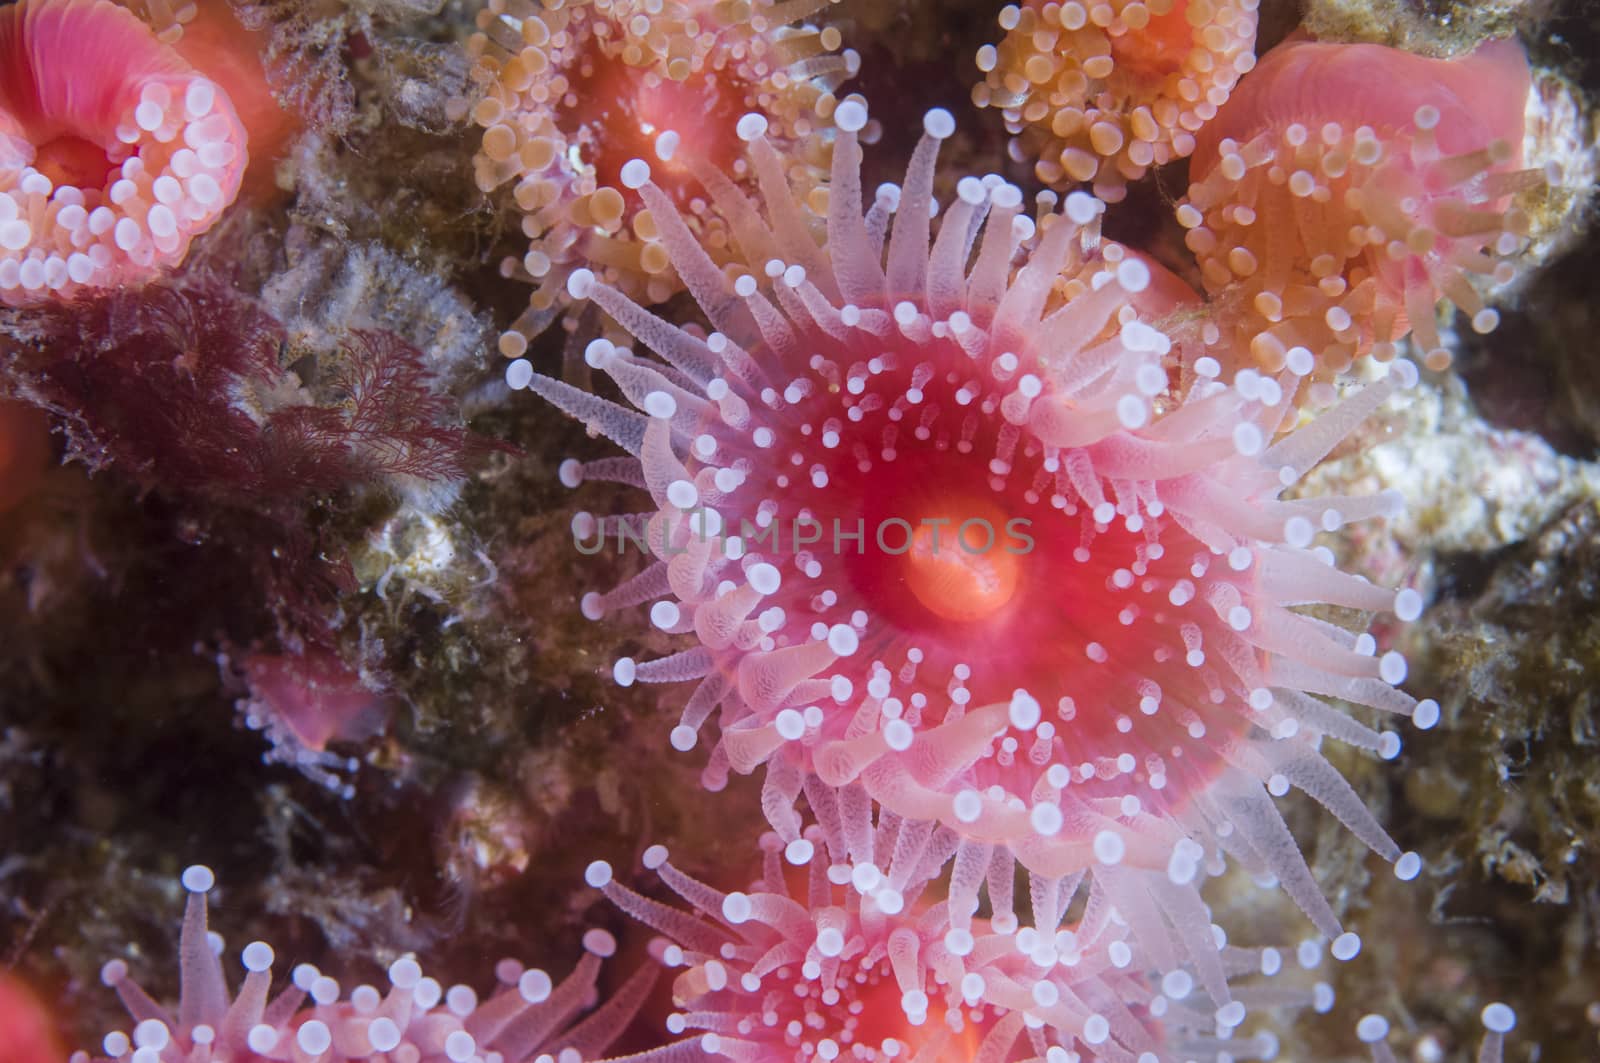 Cup coral off Anacapa Island, California